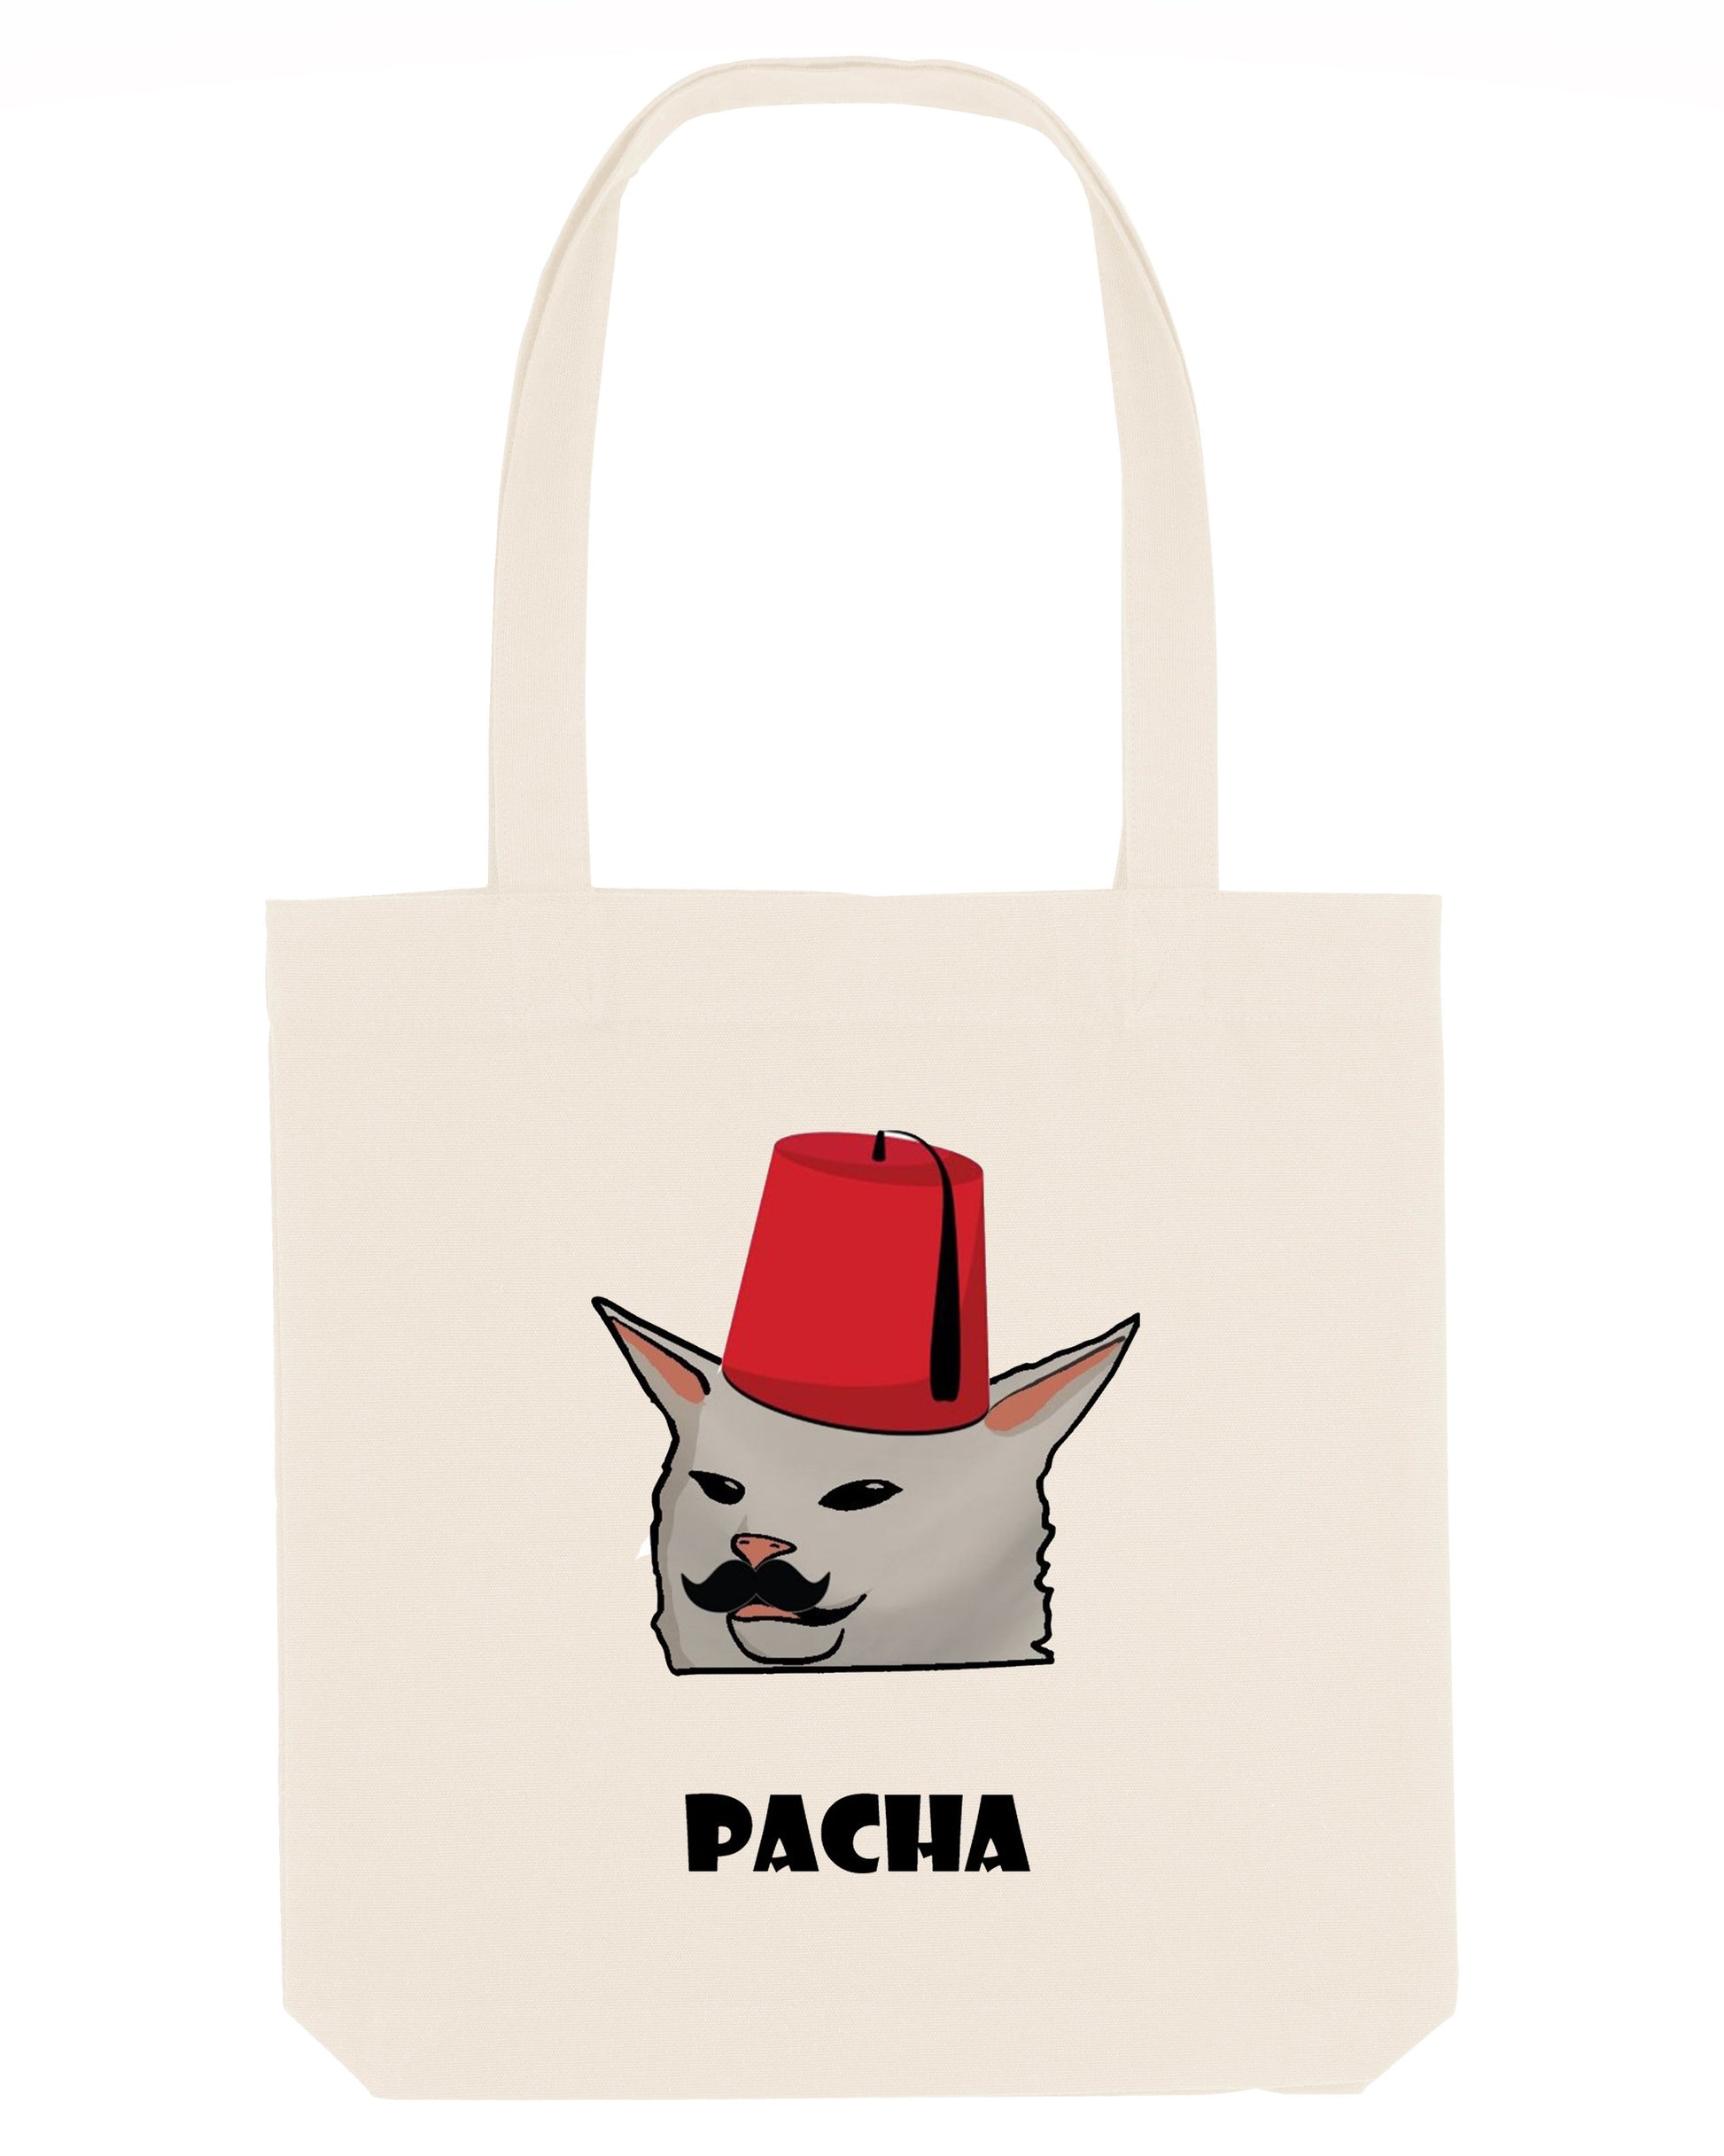 Tote bag "Pacha" - Ghazel Boutique